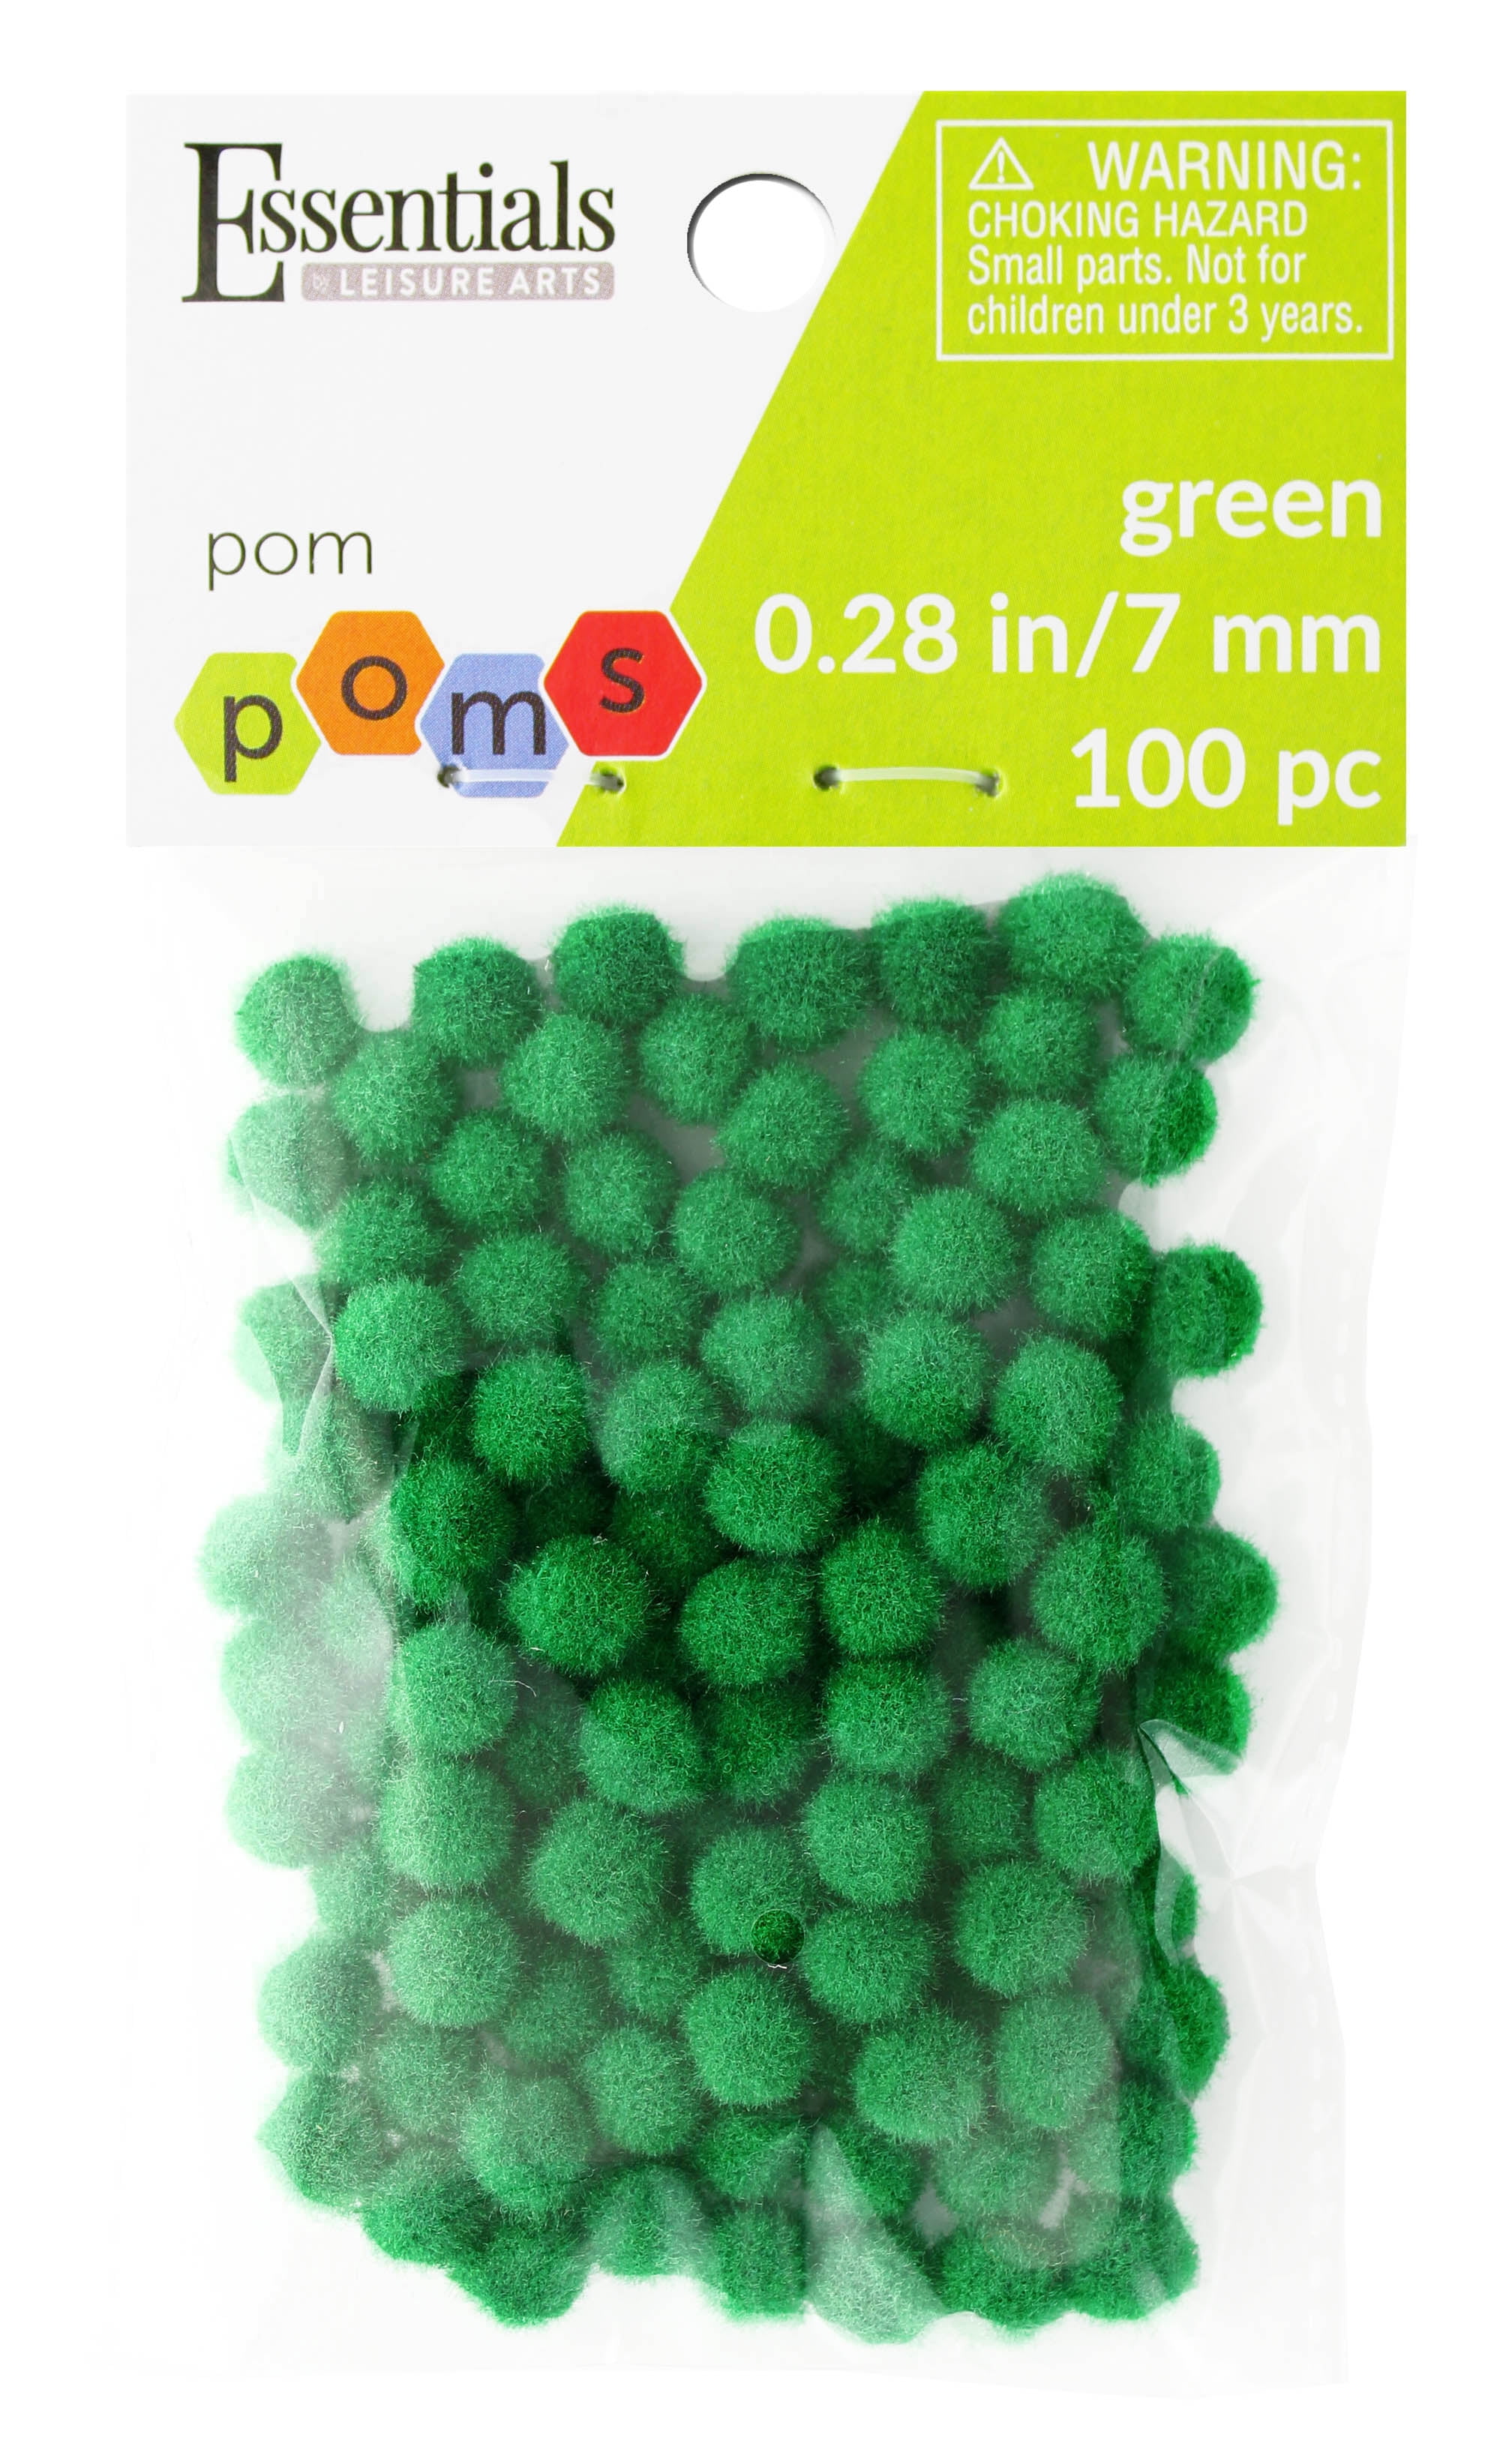 Essentials by Leisure Arts Pom Poms - Green - 1/2 - 100 Piece pom poms  Arts and Crafts - Colored Pompoms for Crafts - Craft pom poms - Puff Balls  for